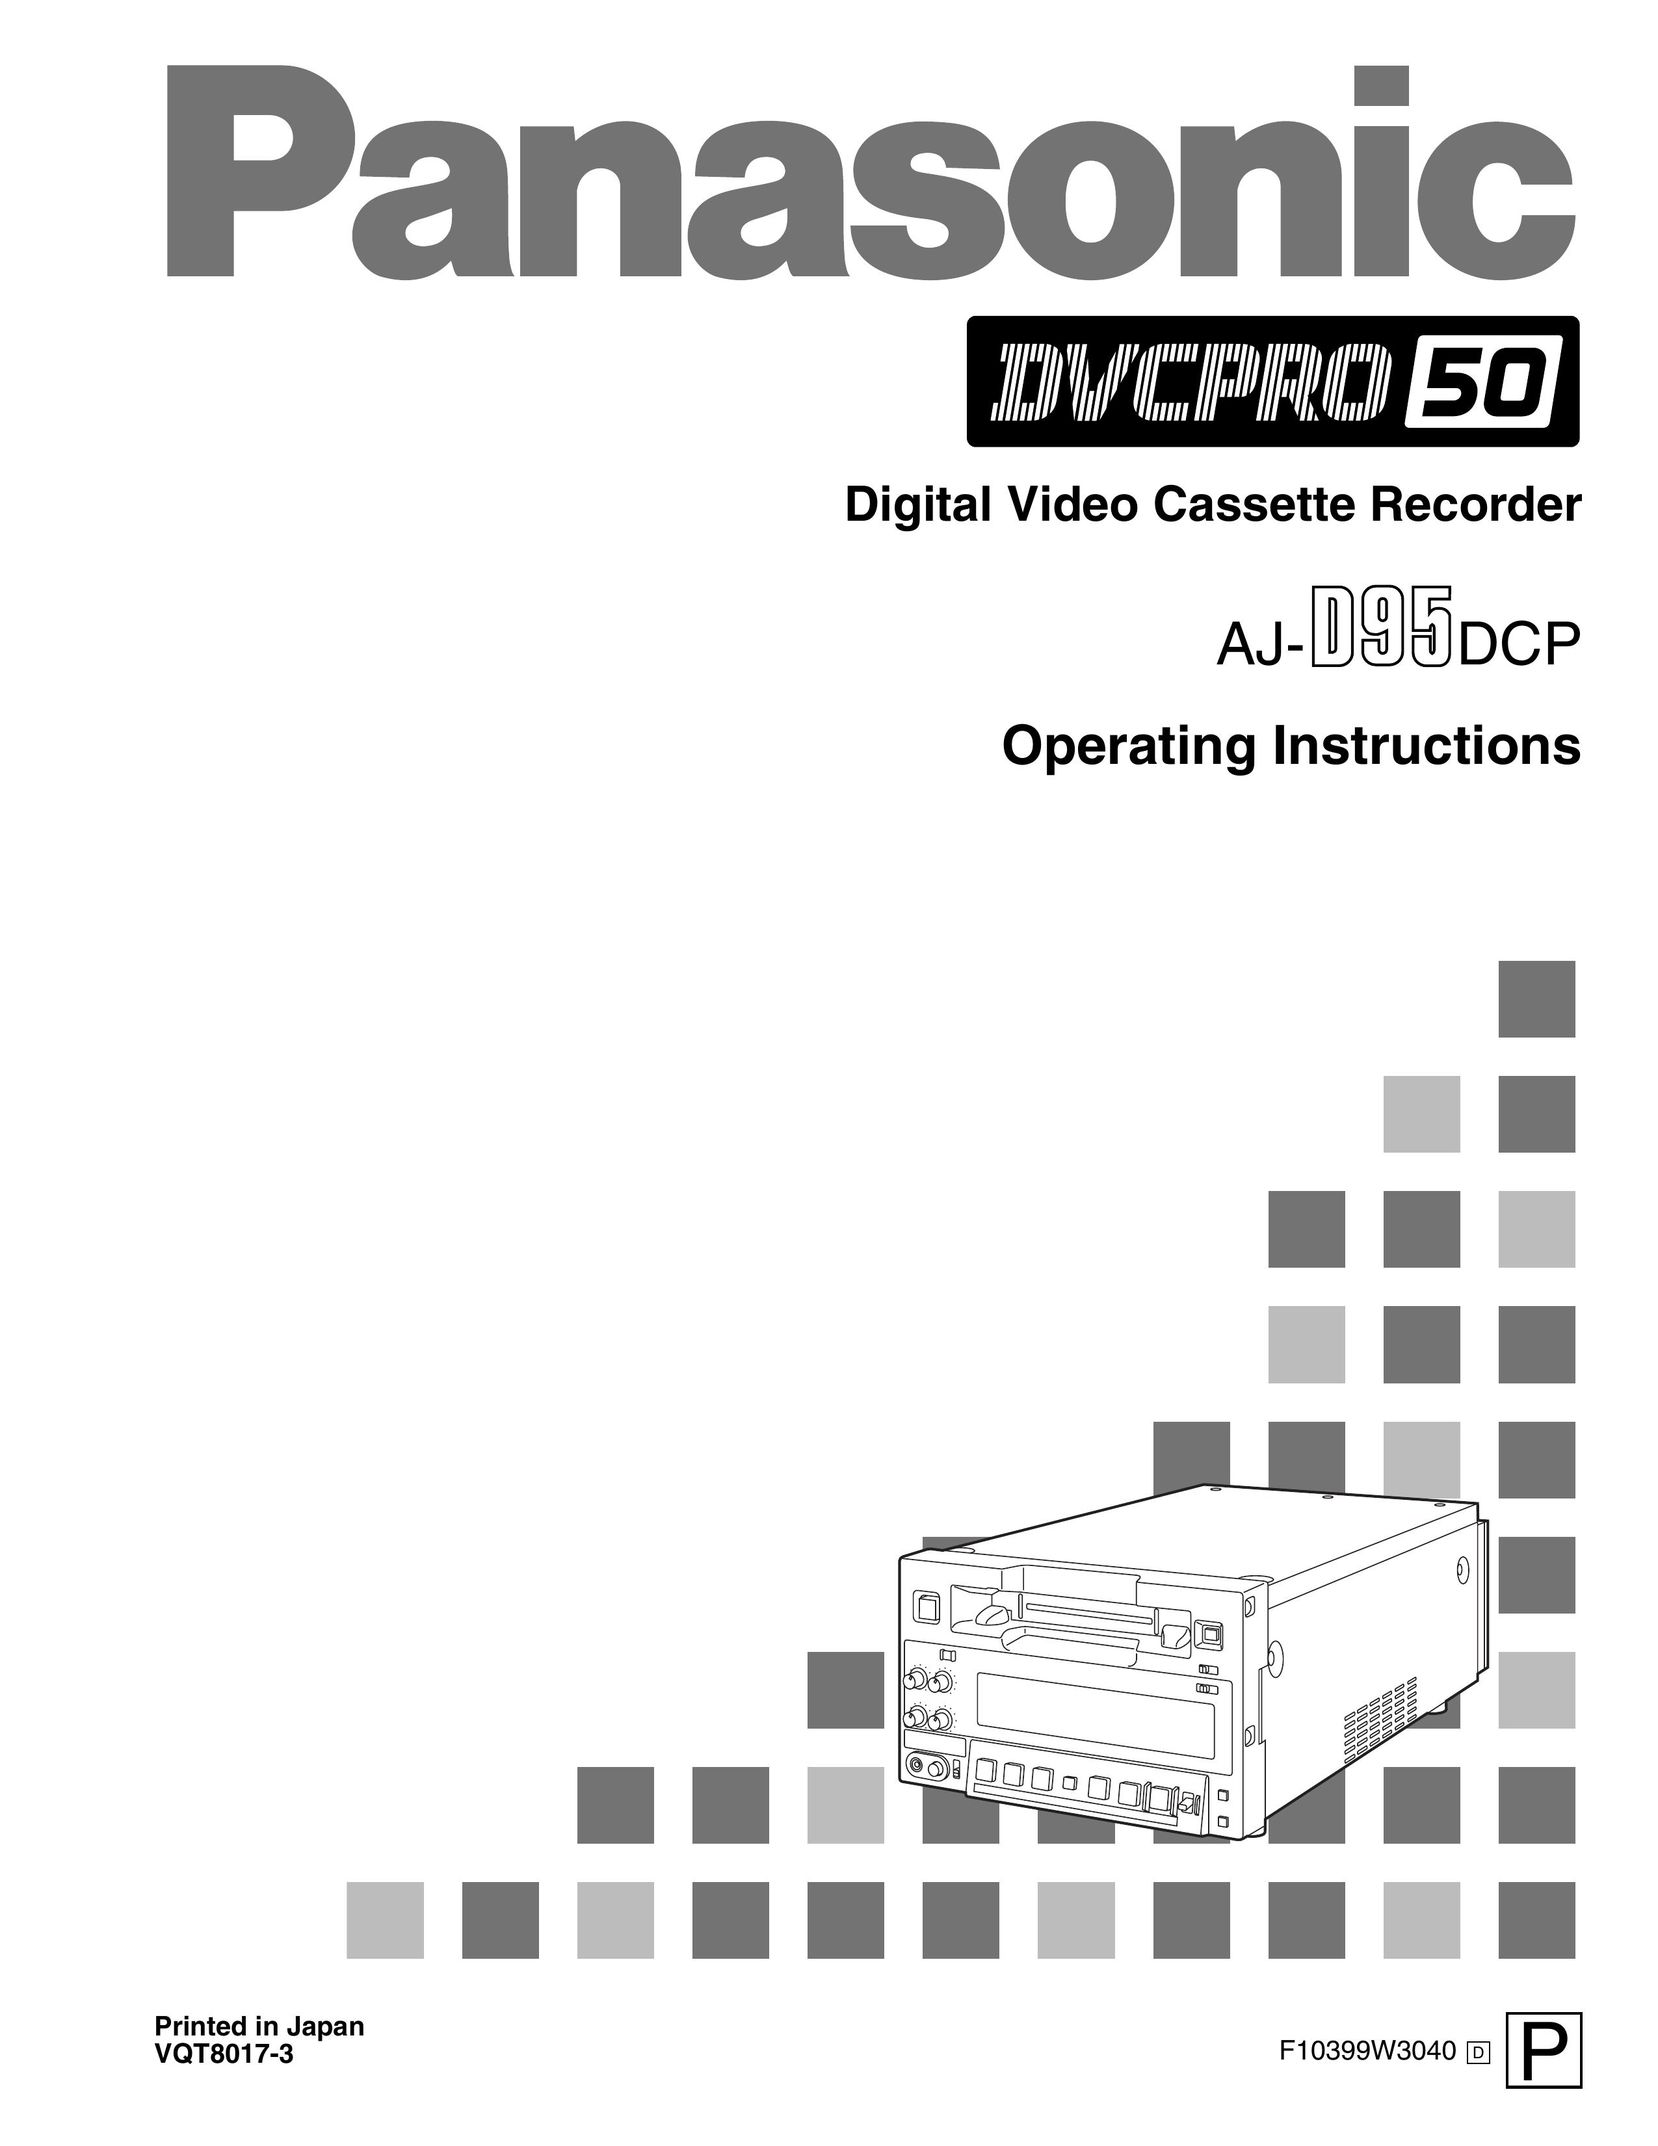 Panasonic AJ-DCP DVR User Manual